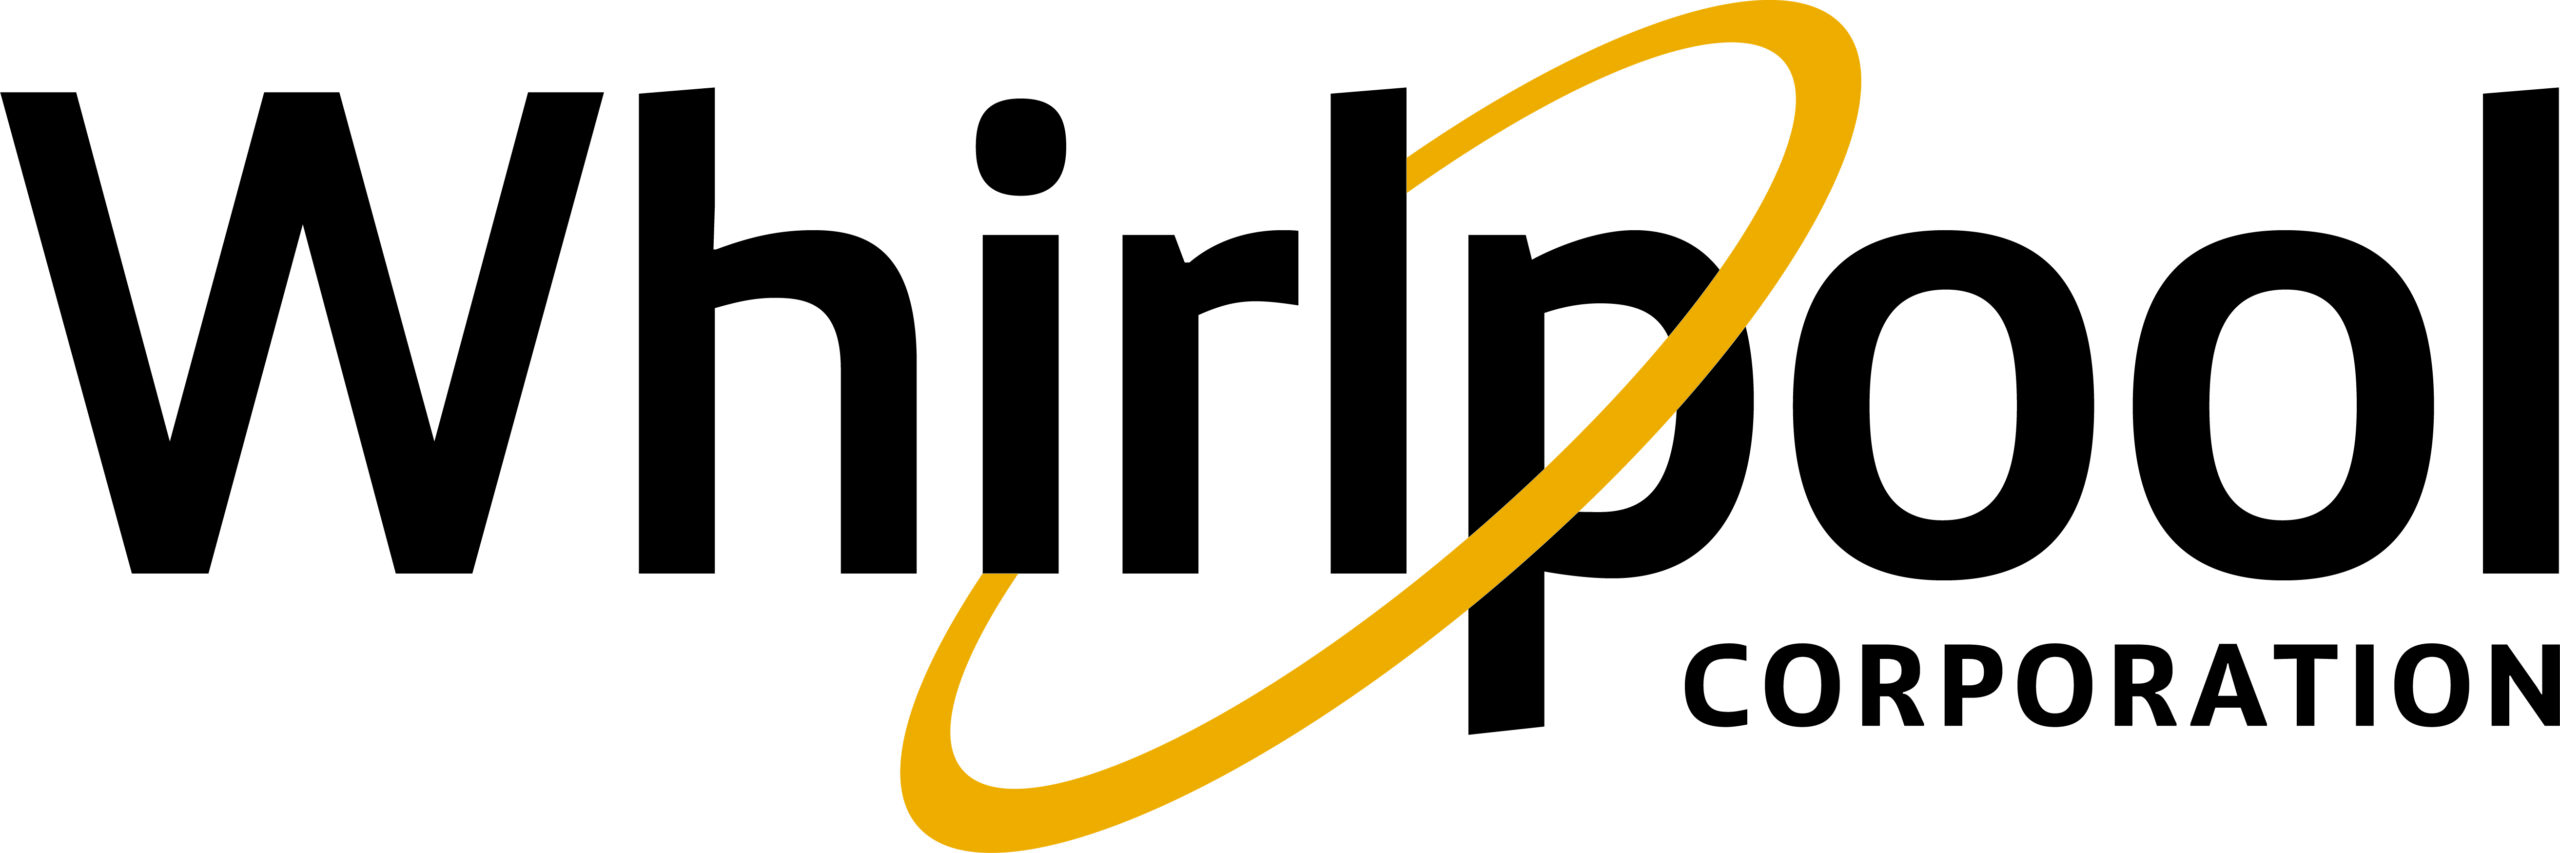 the whirlpool corporation logo